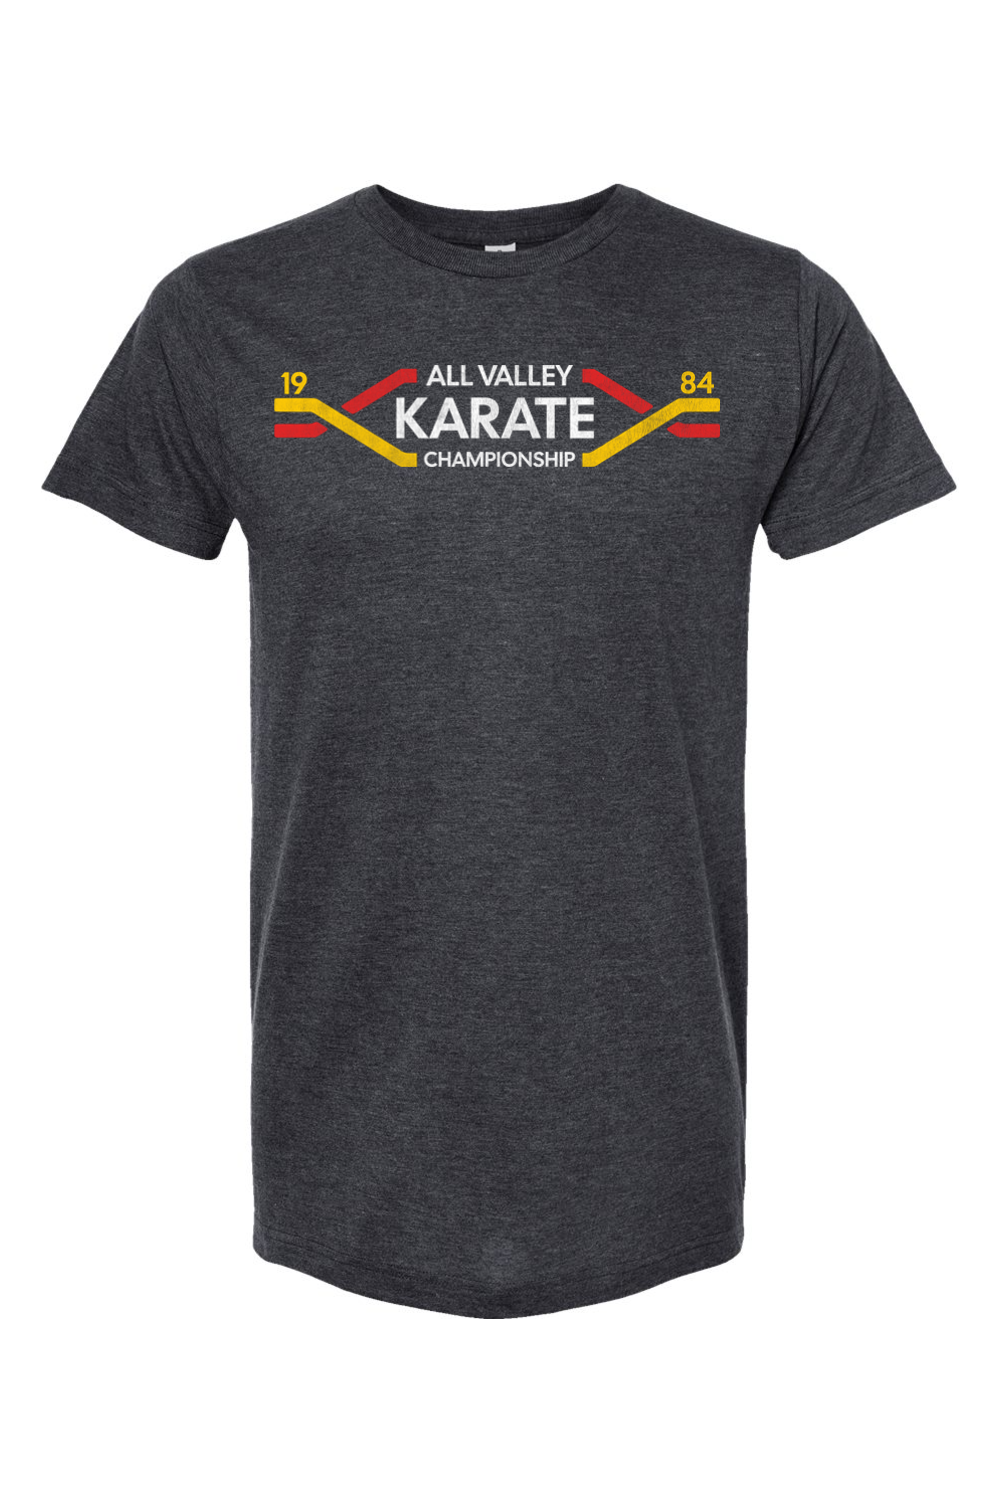 All Valley Karate Championship - 1984 - Yinzylvania